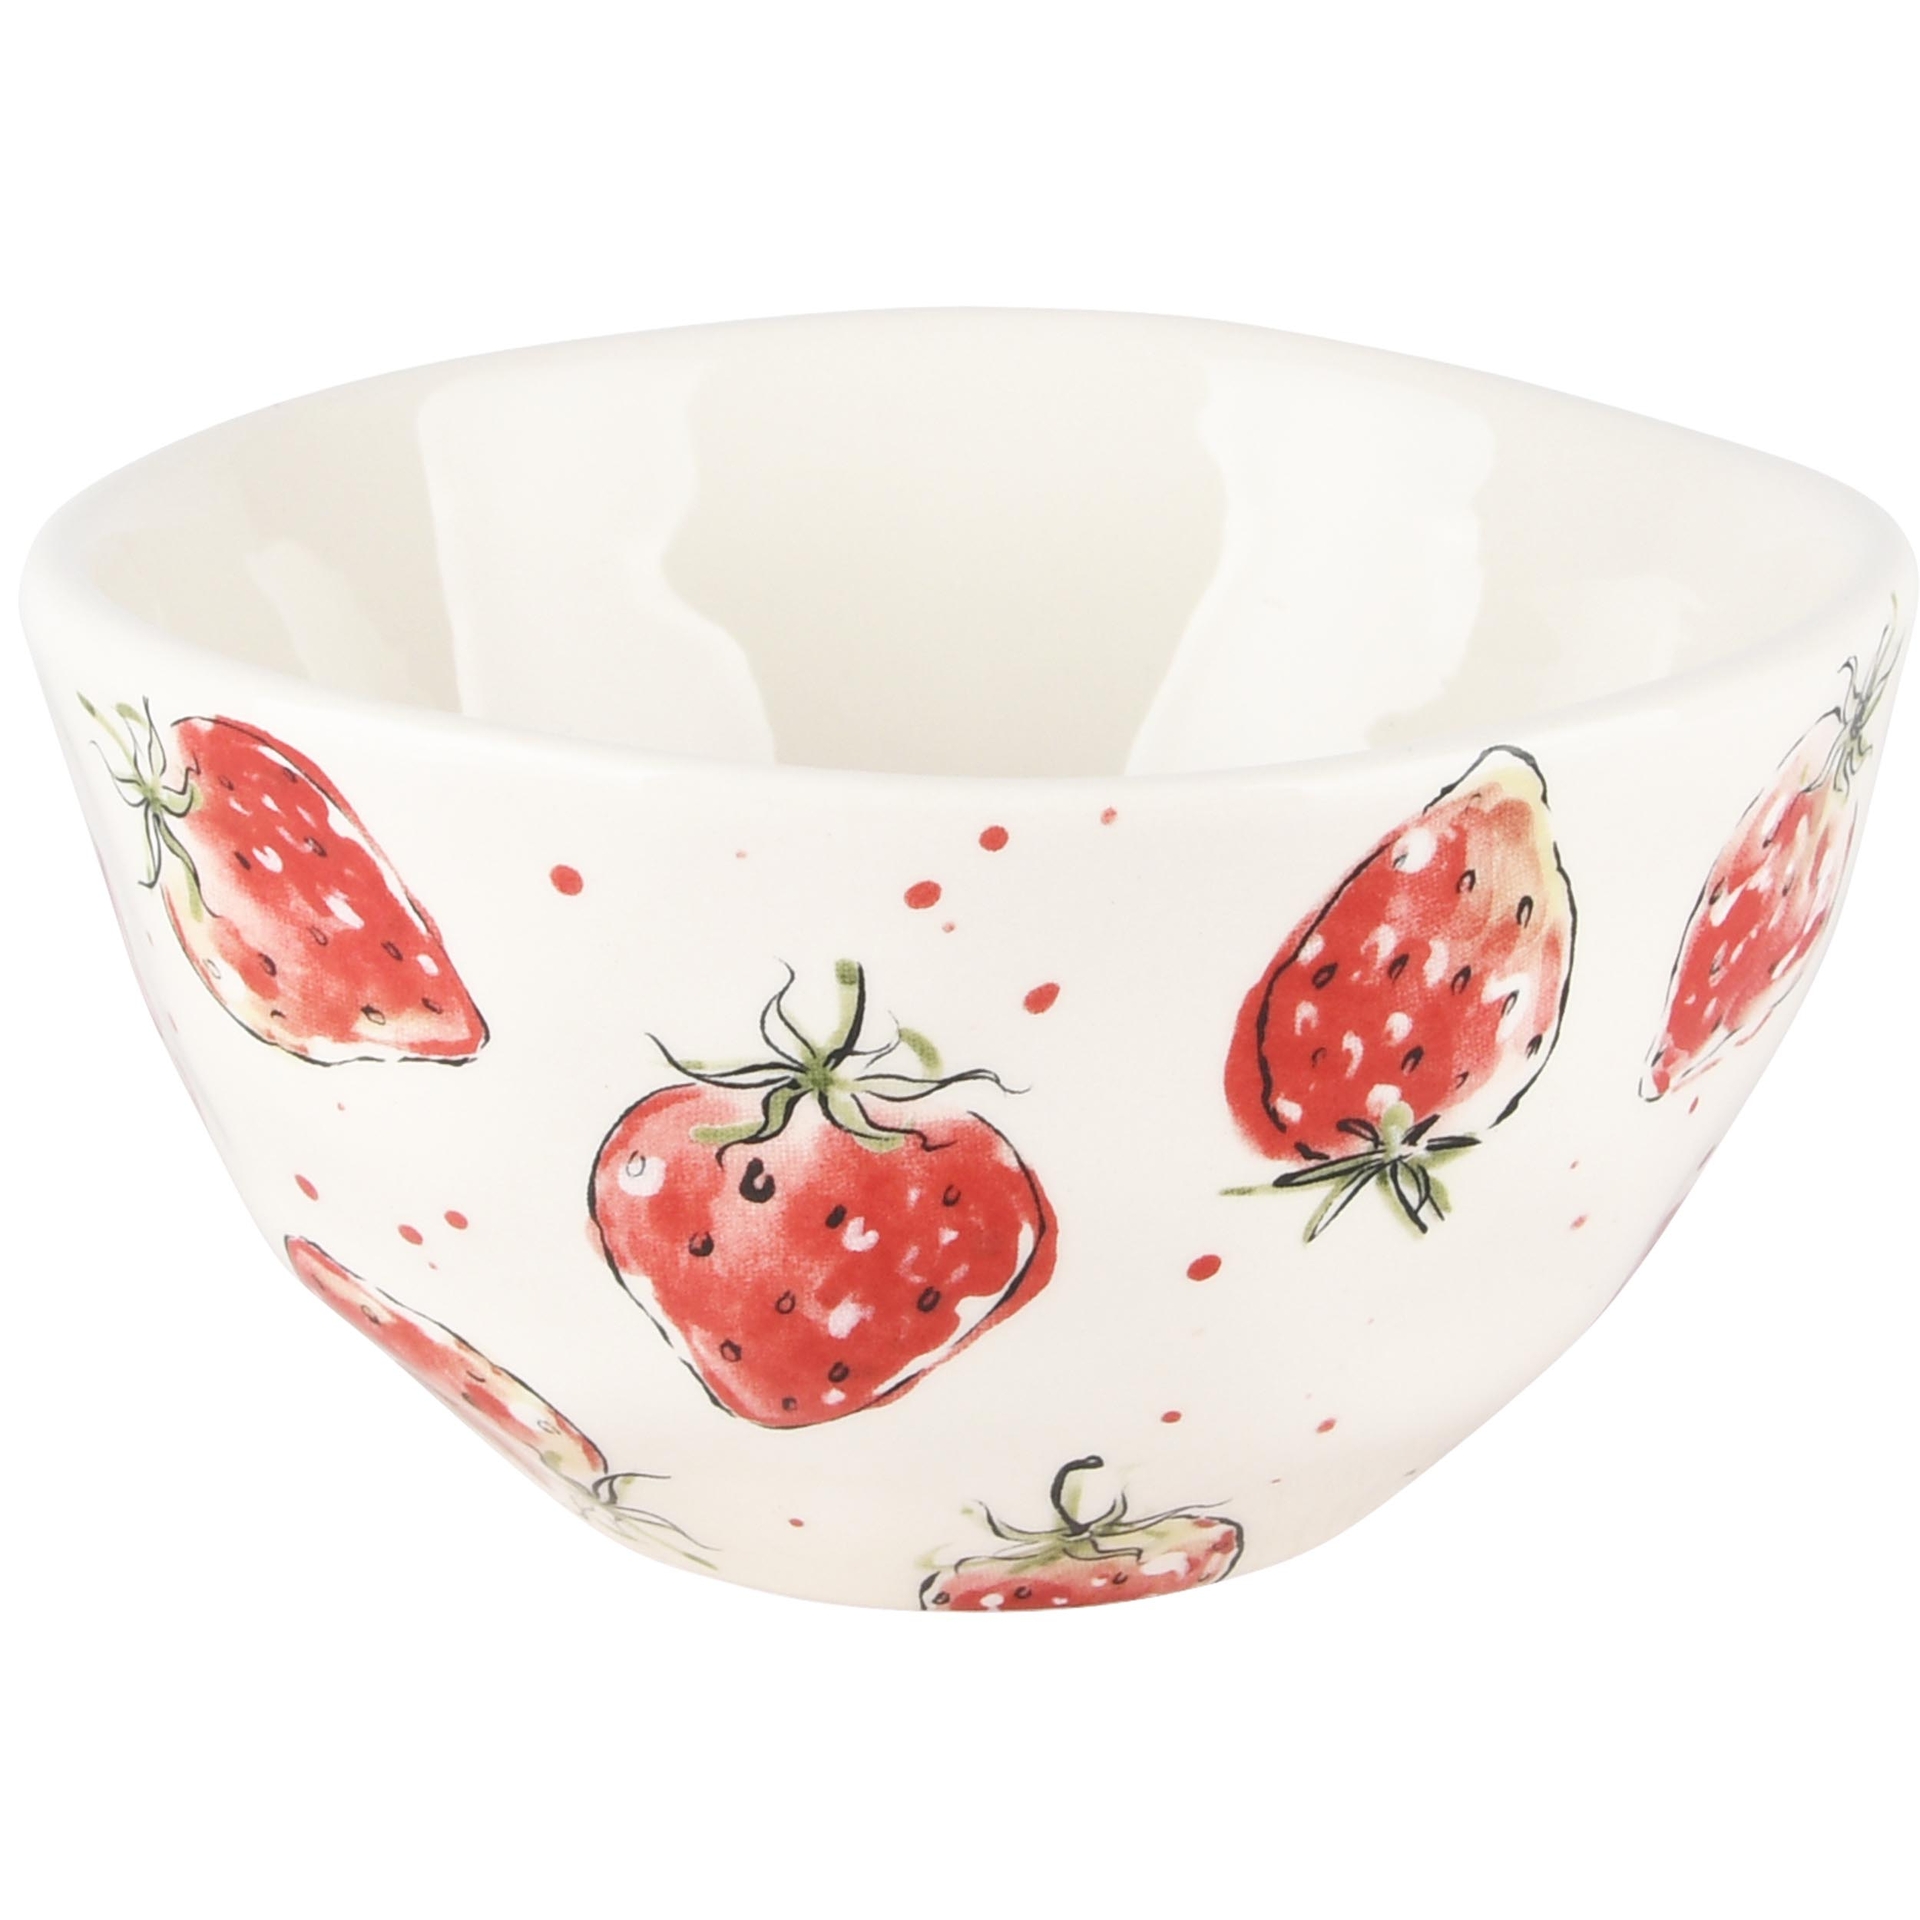 Dekoratief | Bowl m/aardbeien, wit/rood, keramiek, 16x12x7cm | A240794